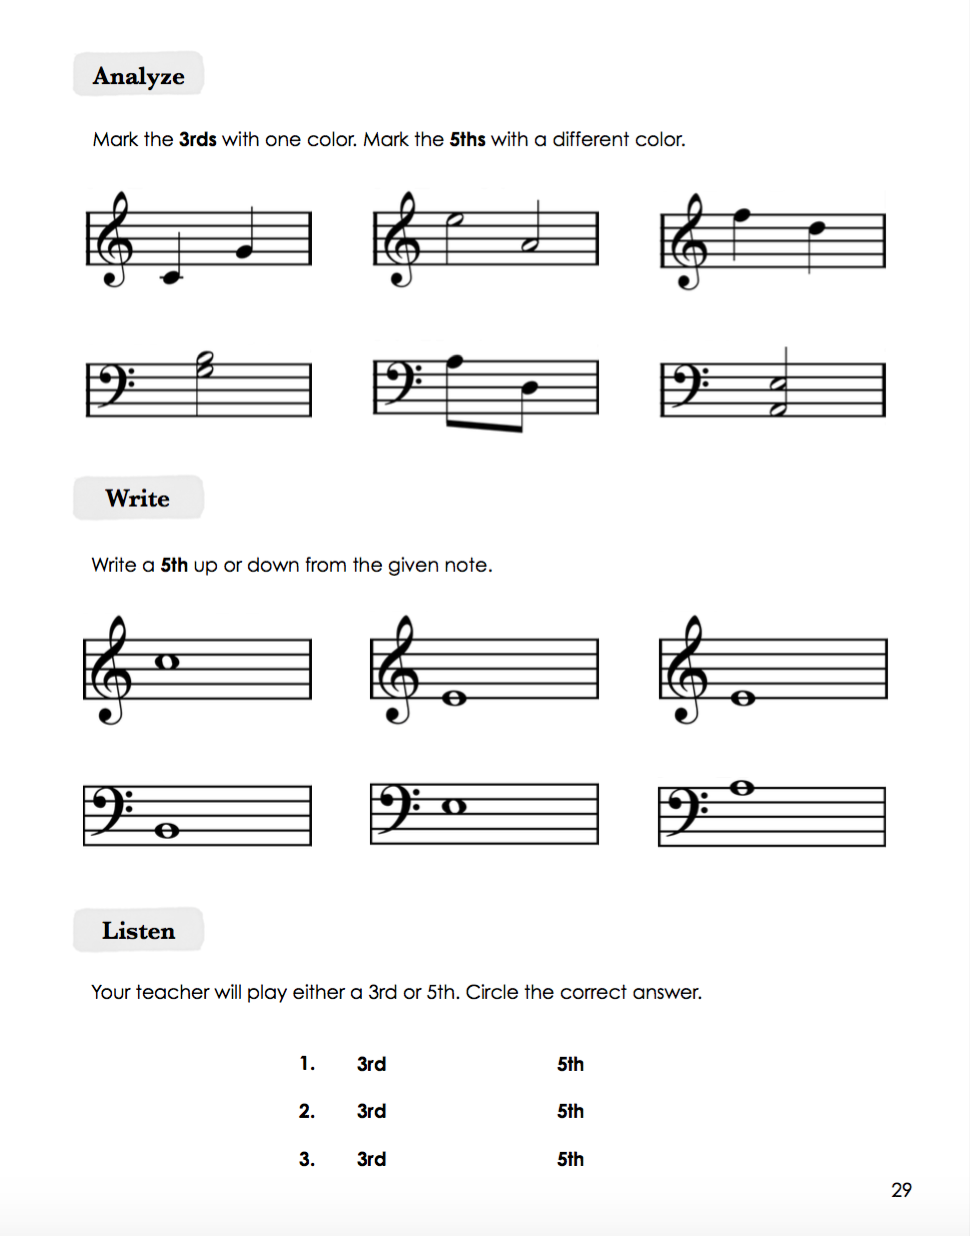 PRE-VENDA SAFARI Piano Safari Livro de Teoria 2 | Piano Safari Method | THEORY BOOK LEVEL 2 PIANO SAFARI NIVEL 2 Livro de Teoria Musical na Loja Mineira do Músico